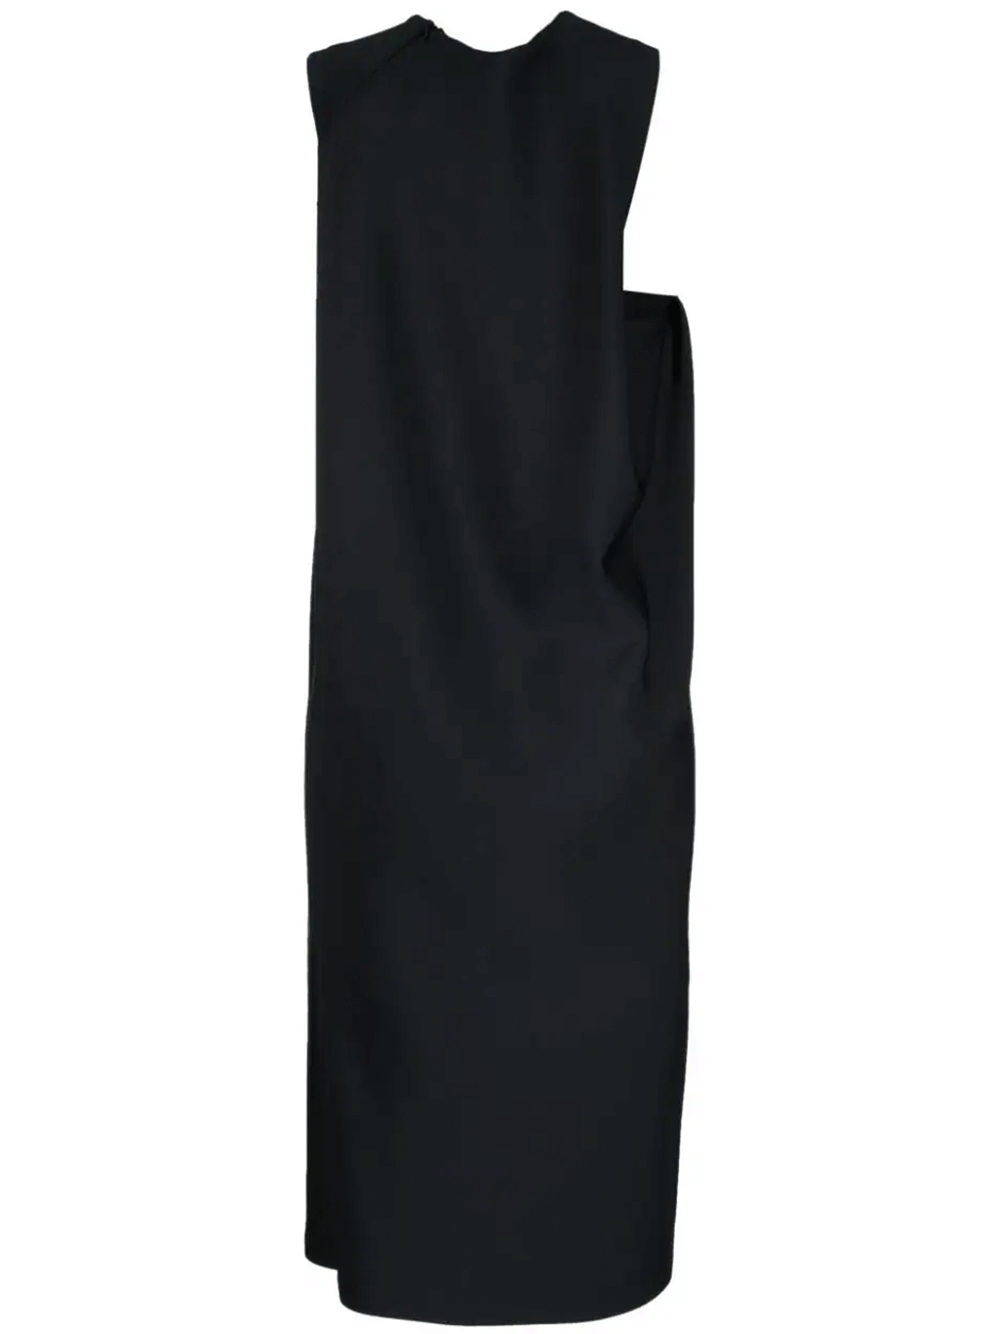 SHANG-XIA-Edgy-Dress-Black-2